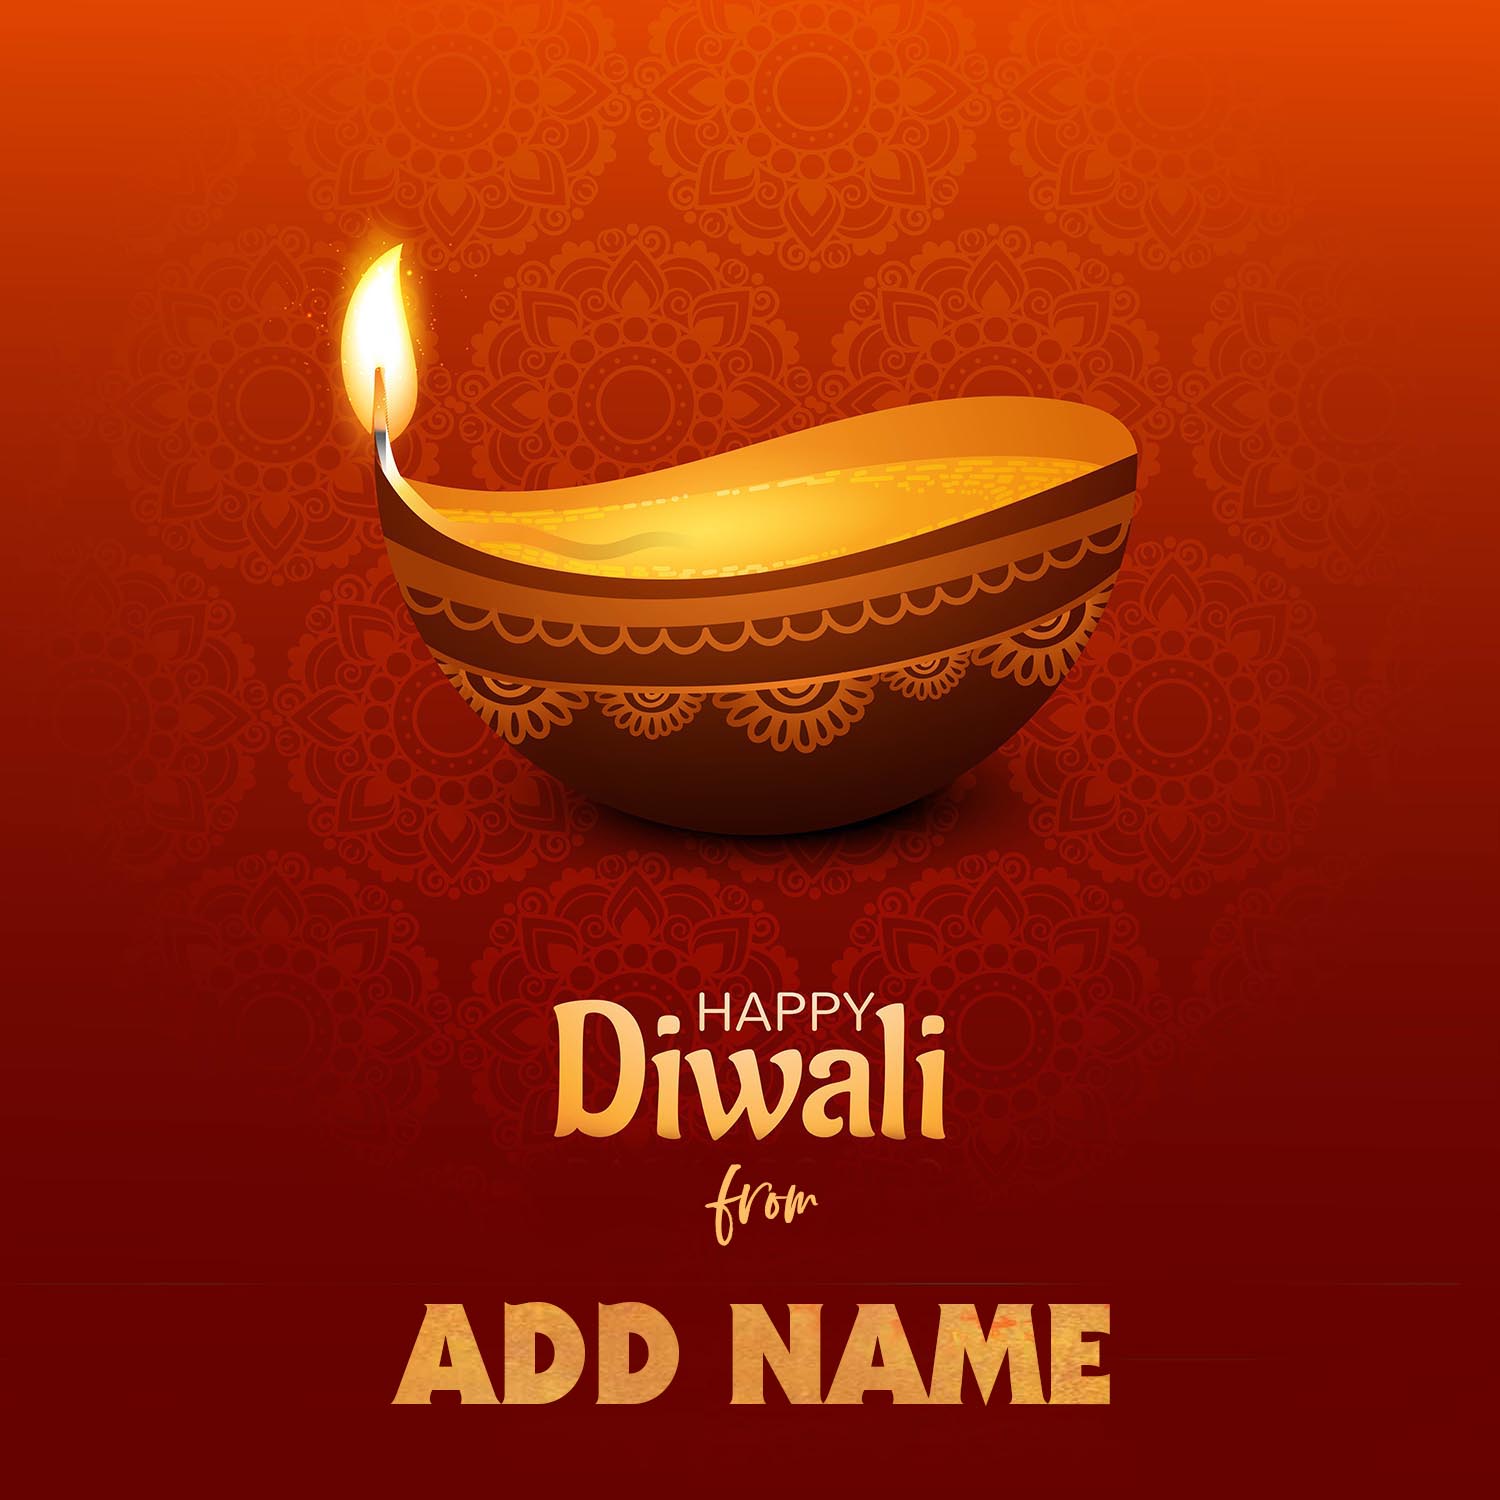 Diwali wishes card